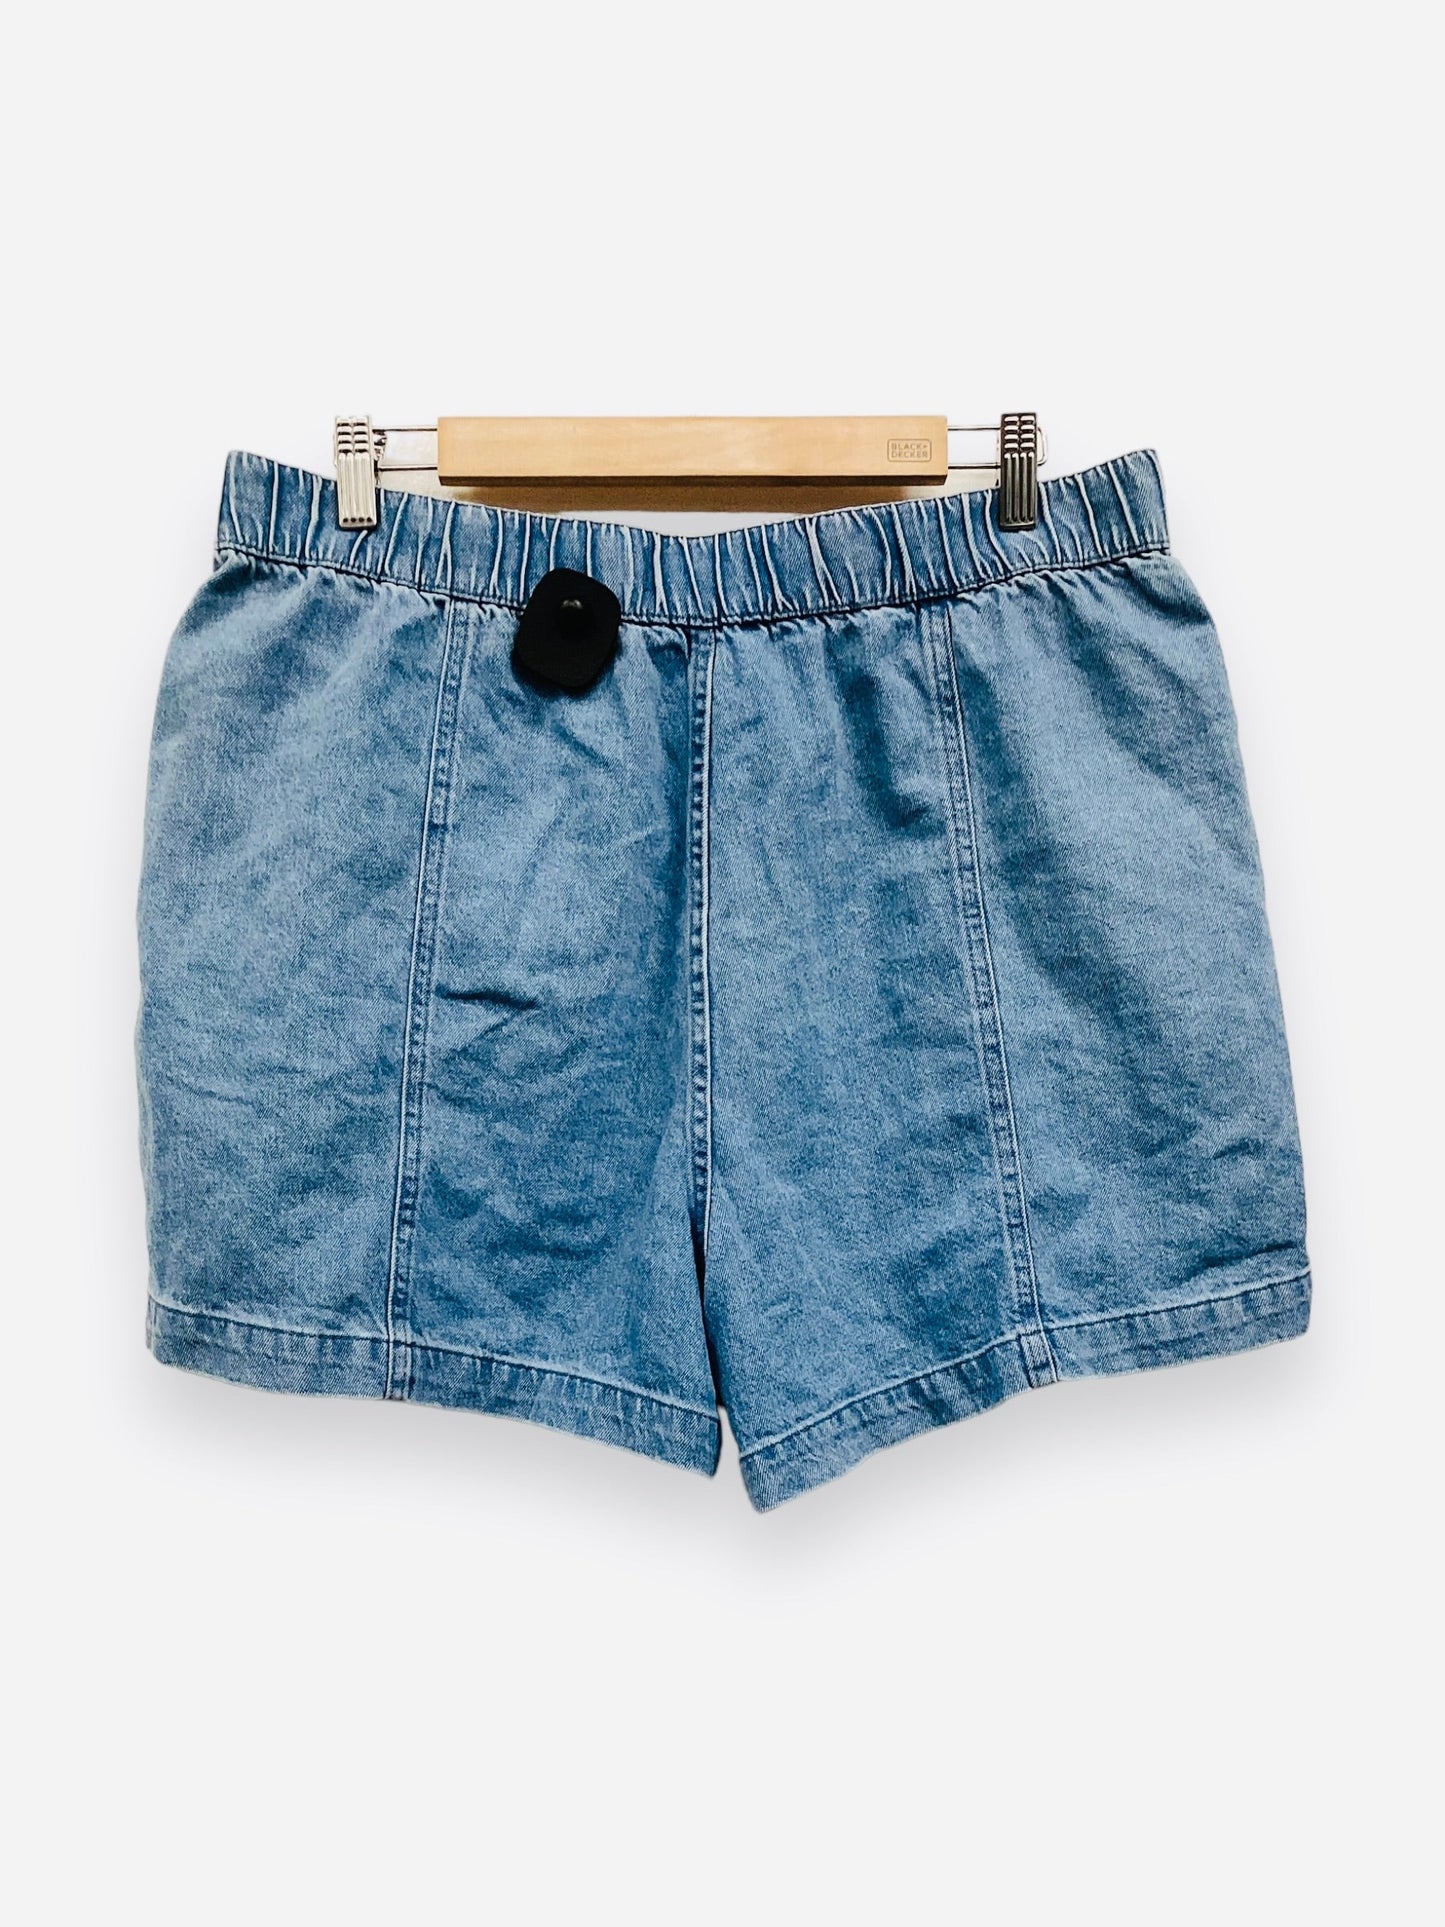 NWT Blue Denim Shorts Madewell, Size L